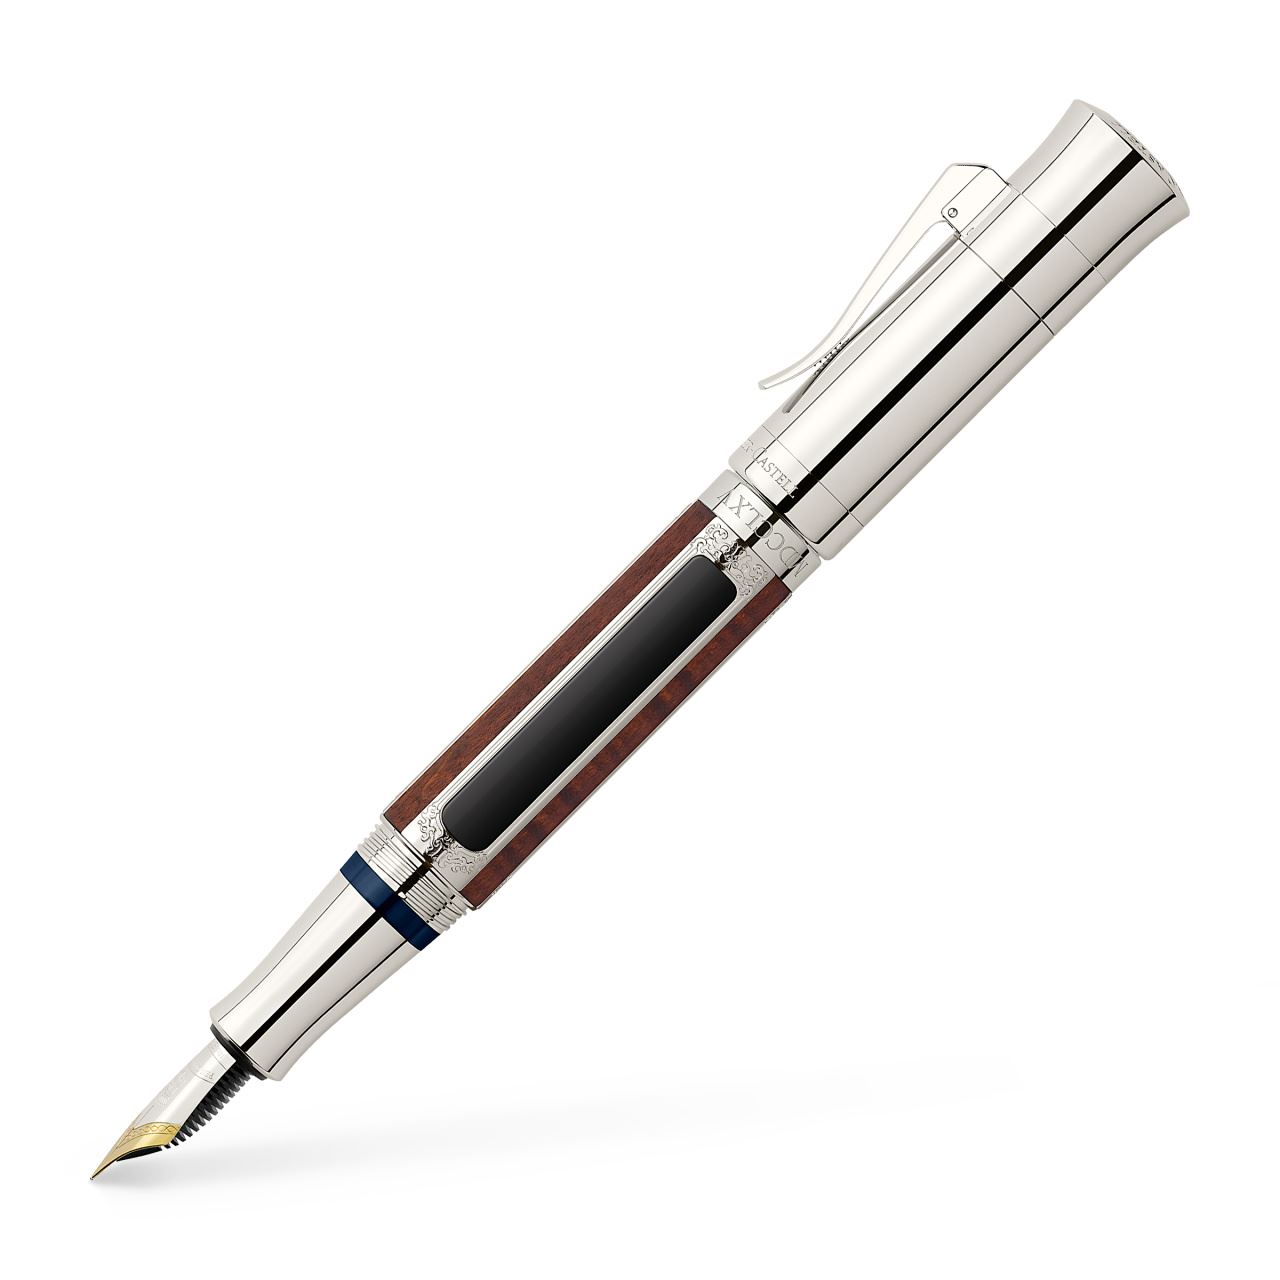 Graf-von-Faber-Castell - Penna stilografica Pen of the Year 2016, Broad